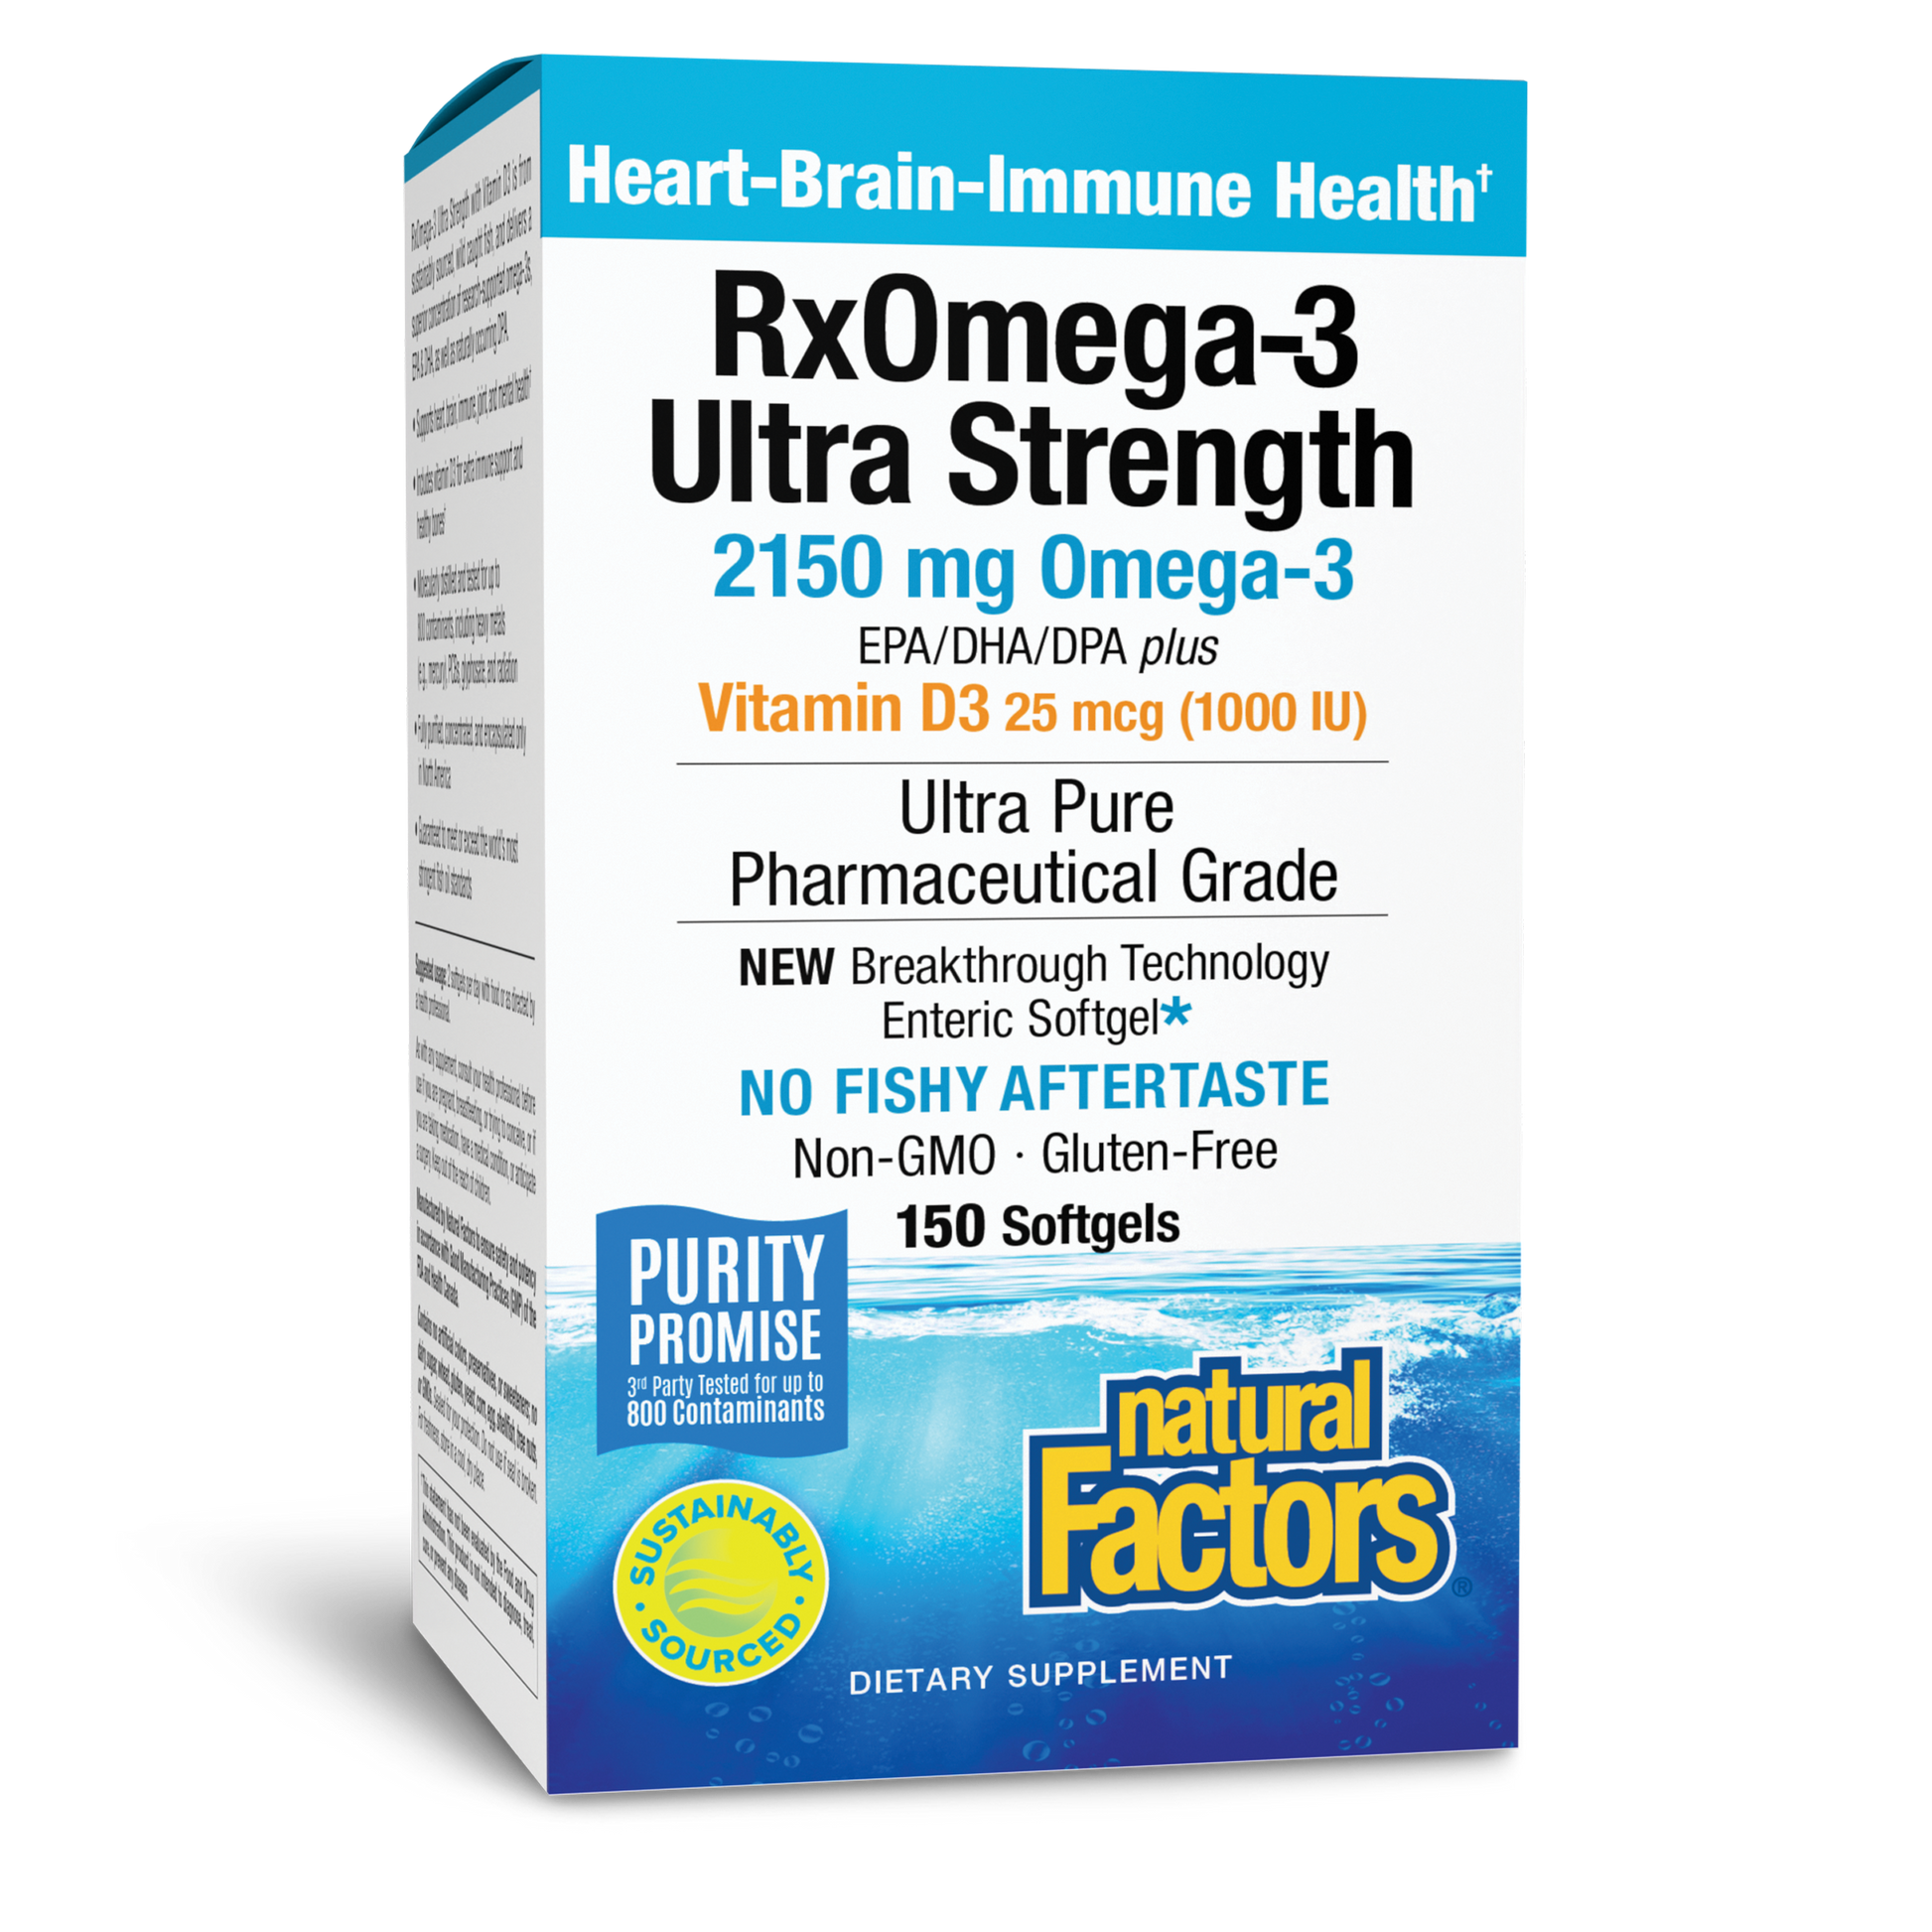 Ultra Strength One-per-Day RxOmega-3 with Vitamin D3 Enteripure® for Natural Factors |variant|hi-res|35492U